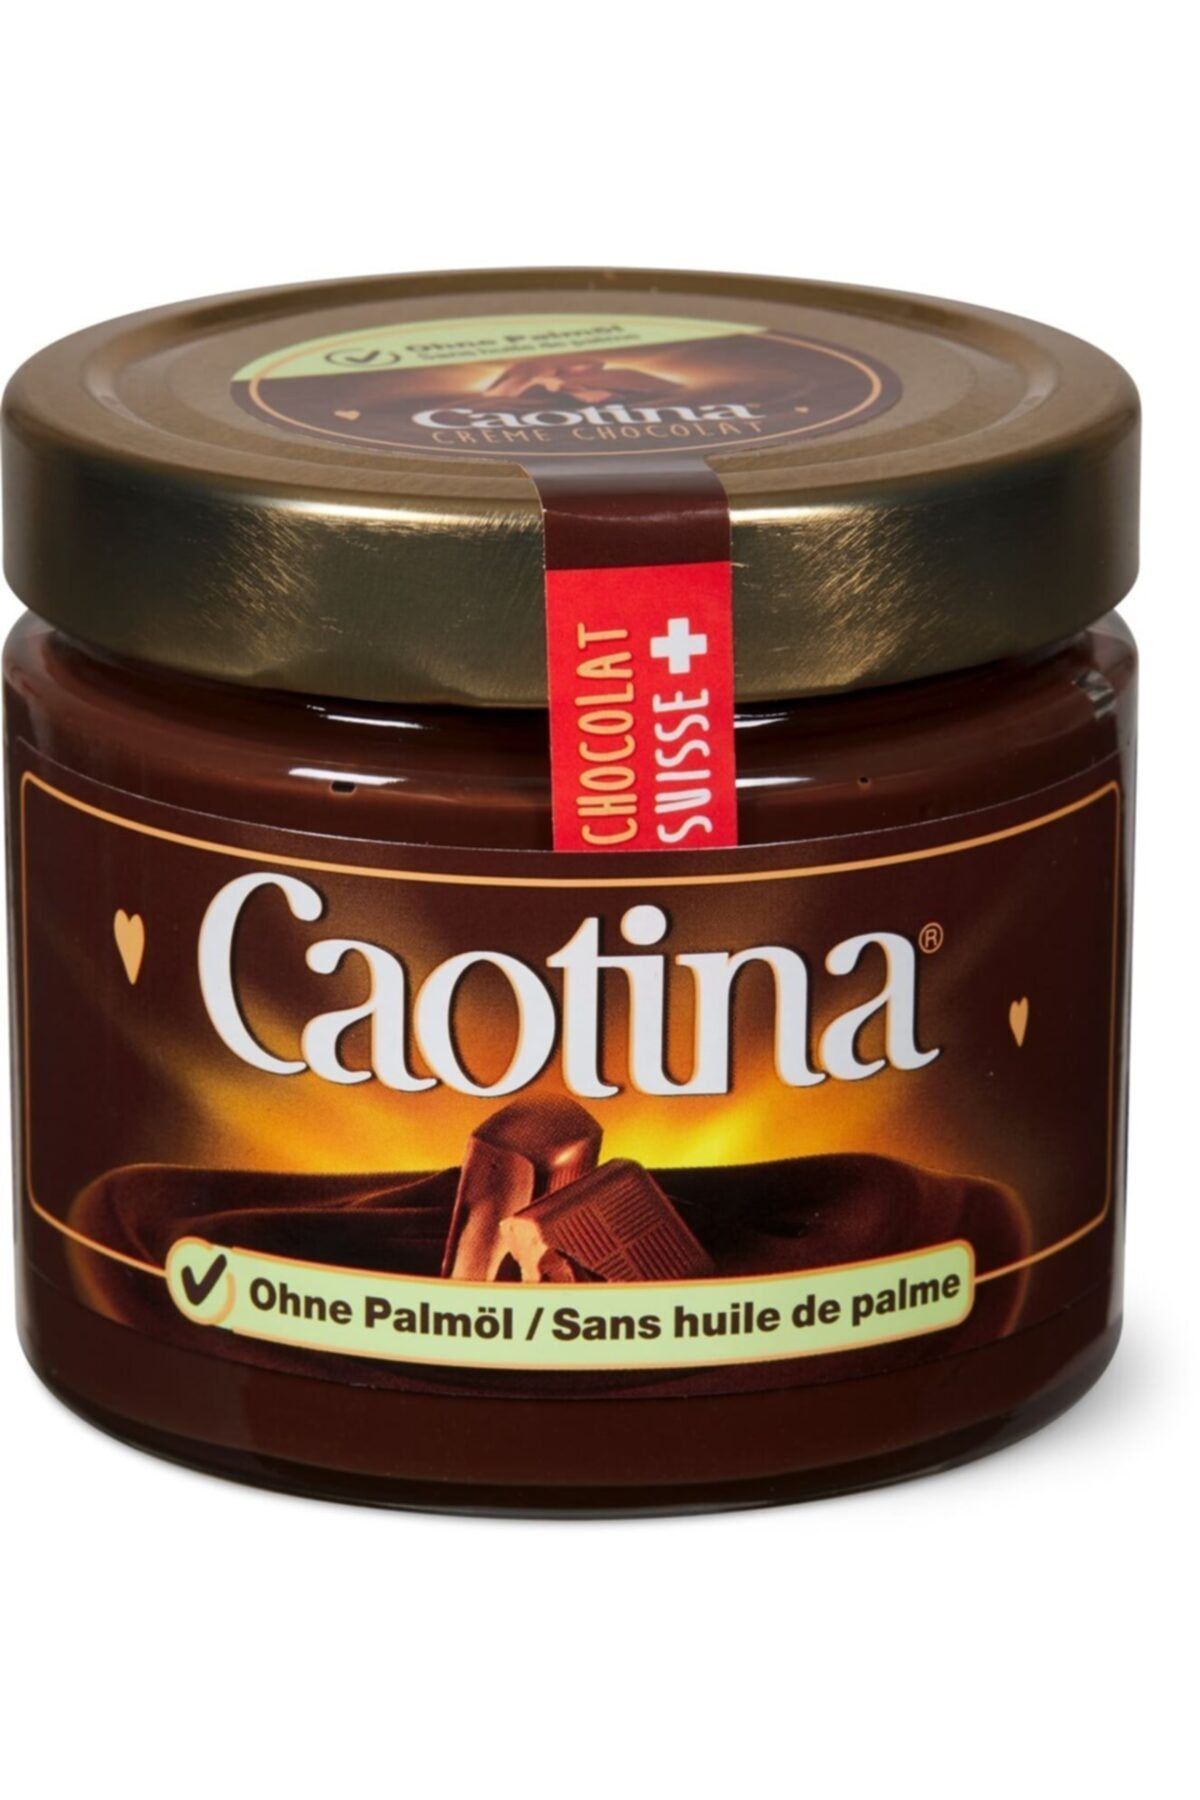 Nutella Caotina Sürülebilir Çikolata 300gr